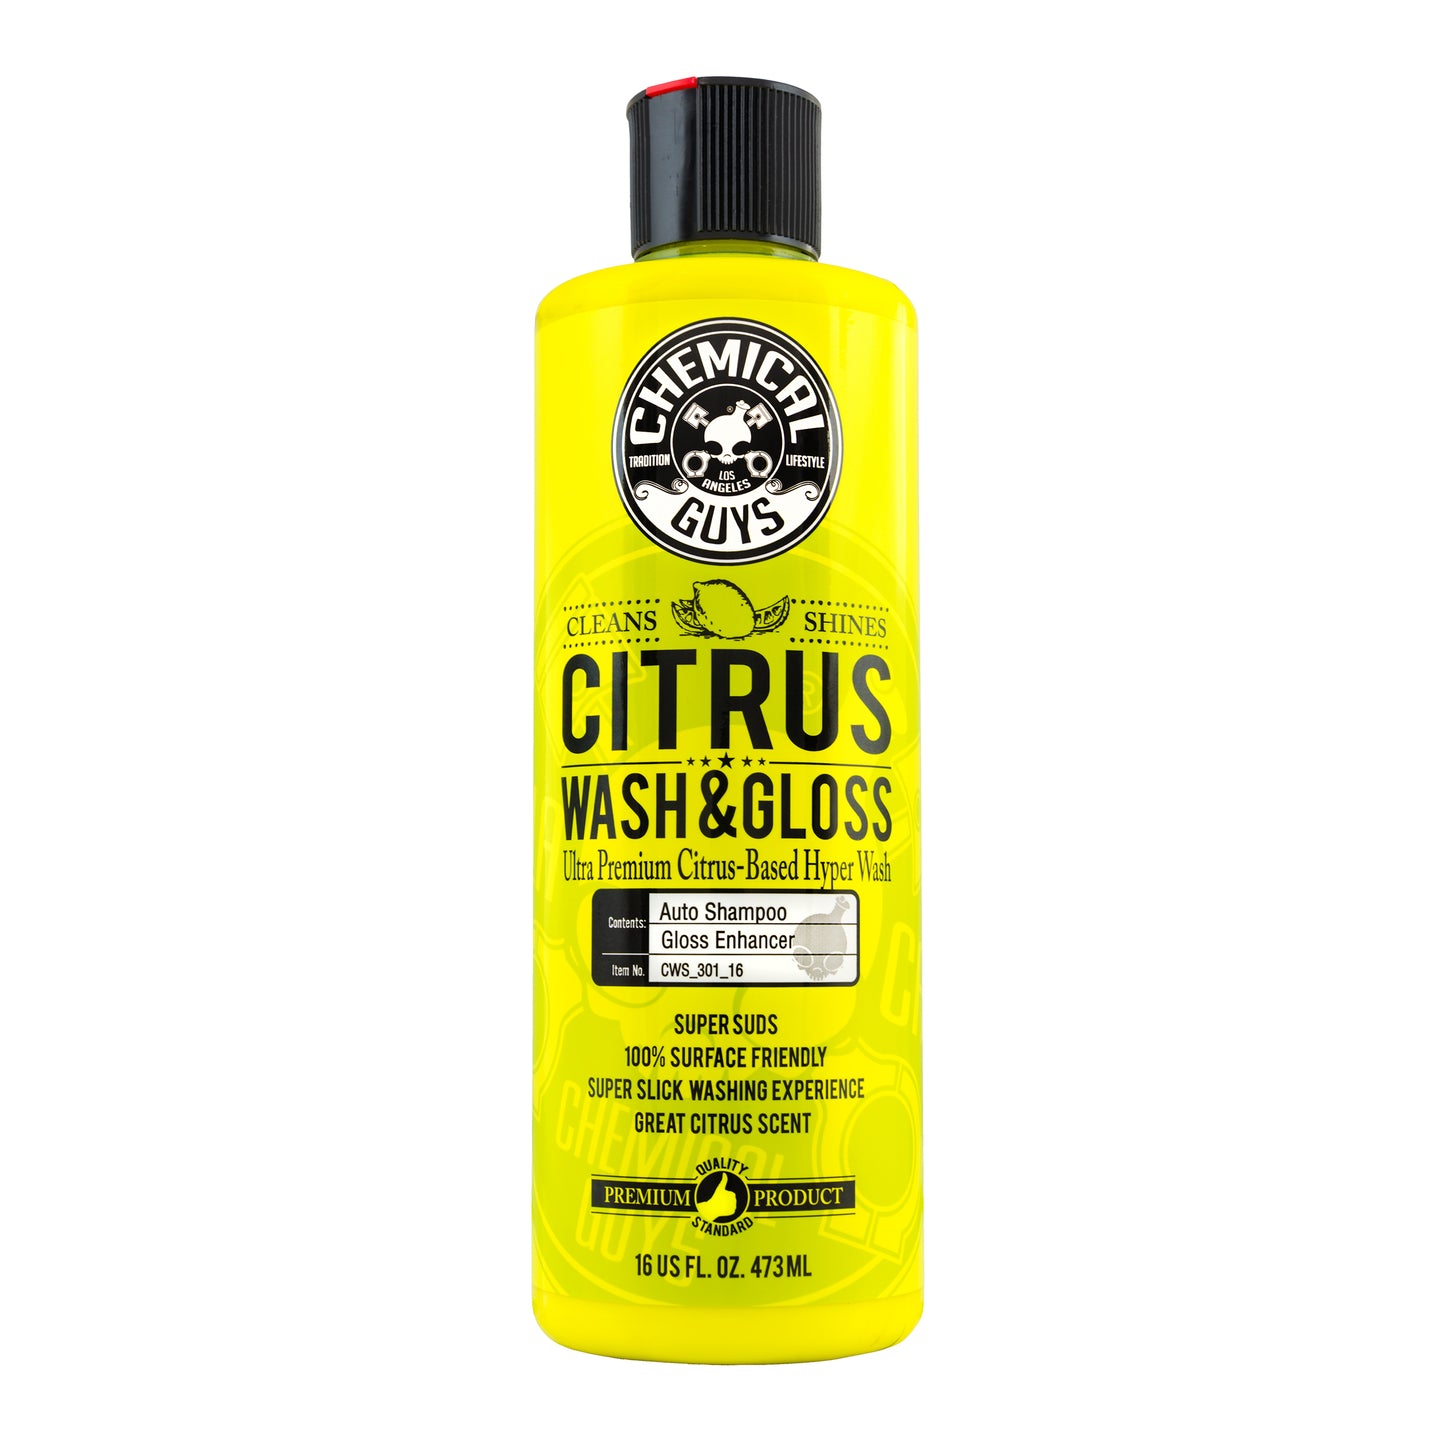 Citrus Wash & Gloss Shampoo with Stranger Mitt Bundle / Kit